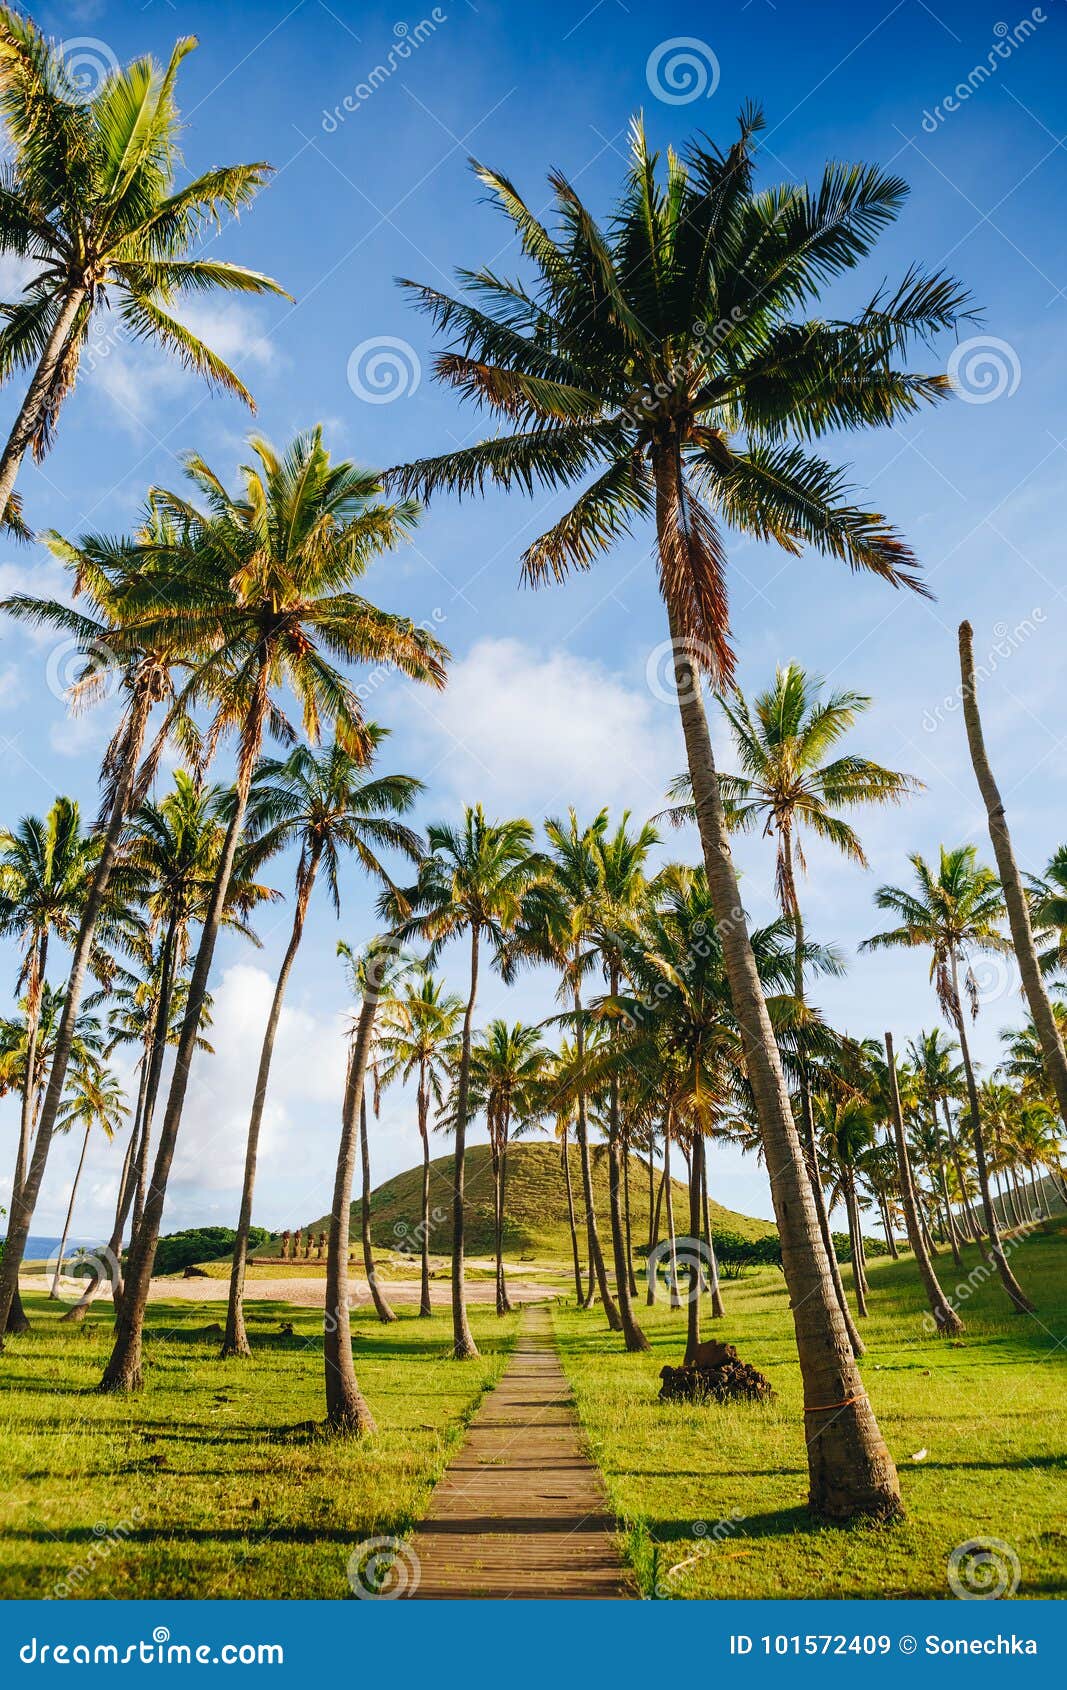 palm trees on the beautiful anakena beach, easter island